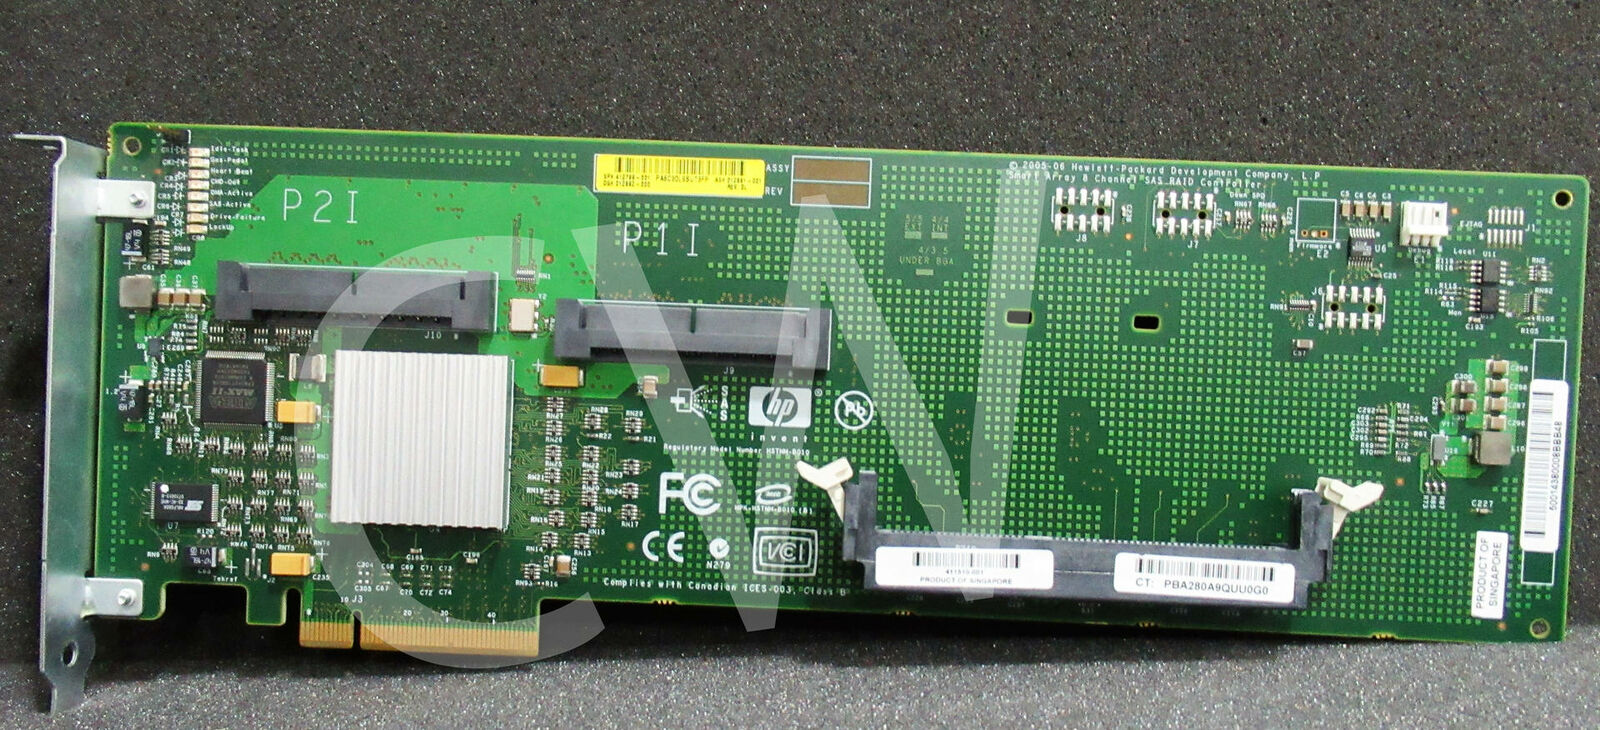 412799-001 411508-B21 HP SMART ARRAY E200 PCI-E x4 SAS 3G RAID CONTROLLER CARD